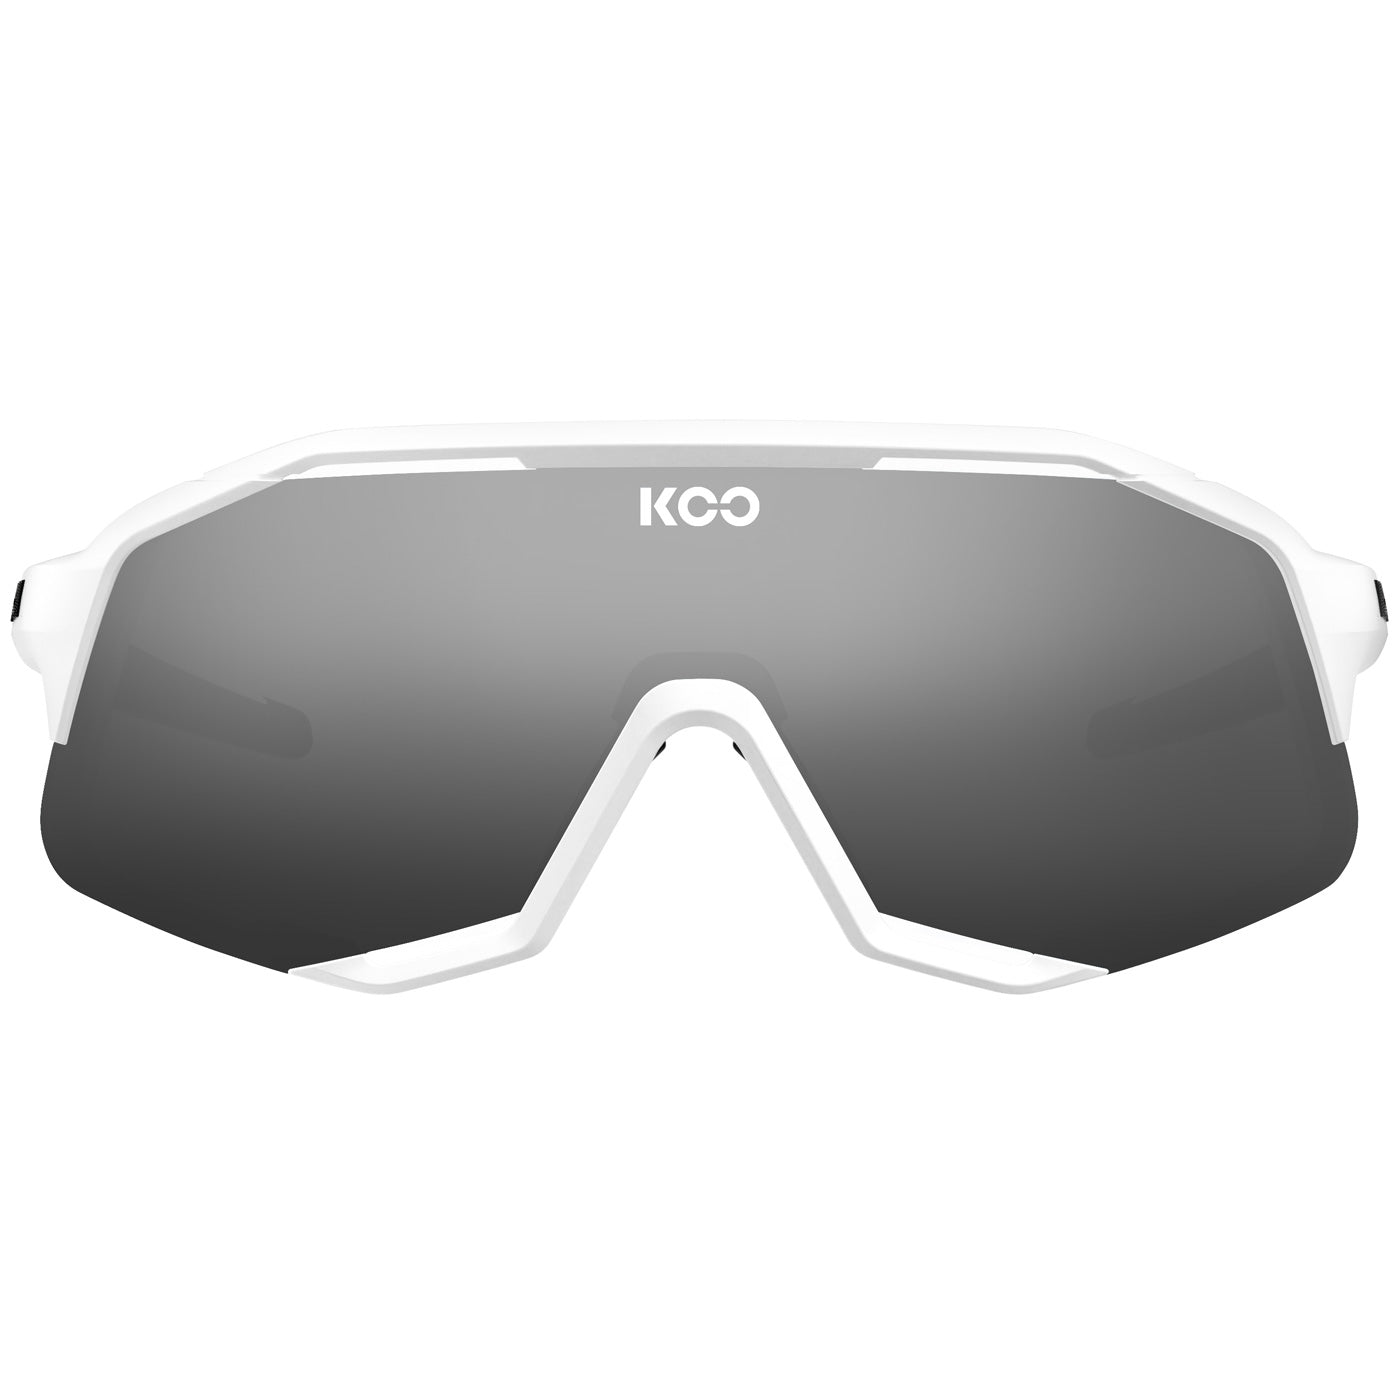 KOO Demos brille - Maratona Dles Dolomites